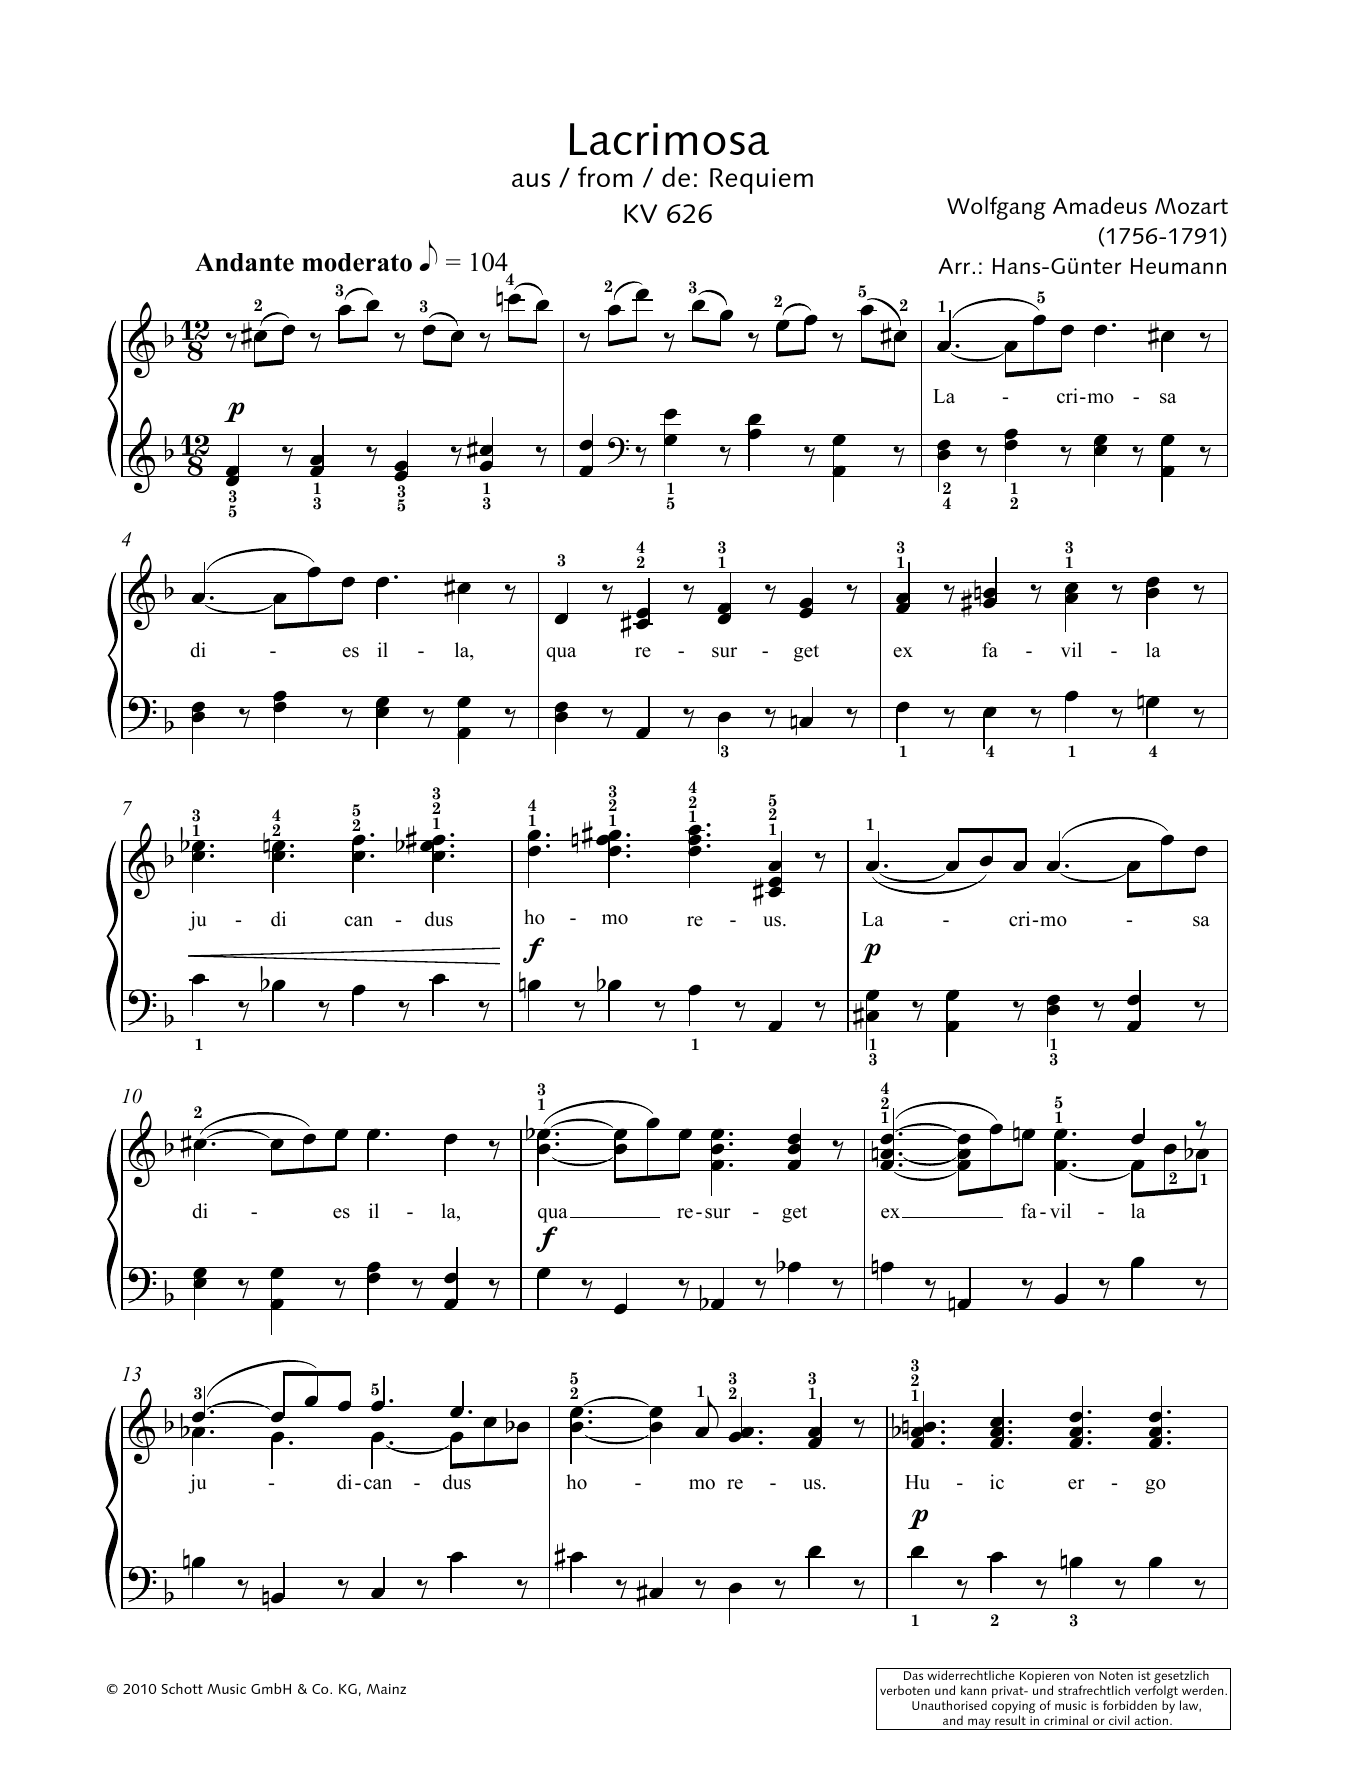 Hans-Gunter Heumann Lacrimosa Sheet Music Notes & Chords for Piano Solo - Download or Print PDF